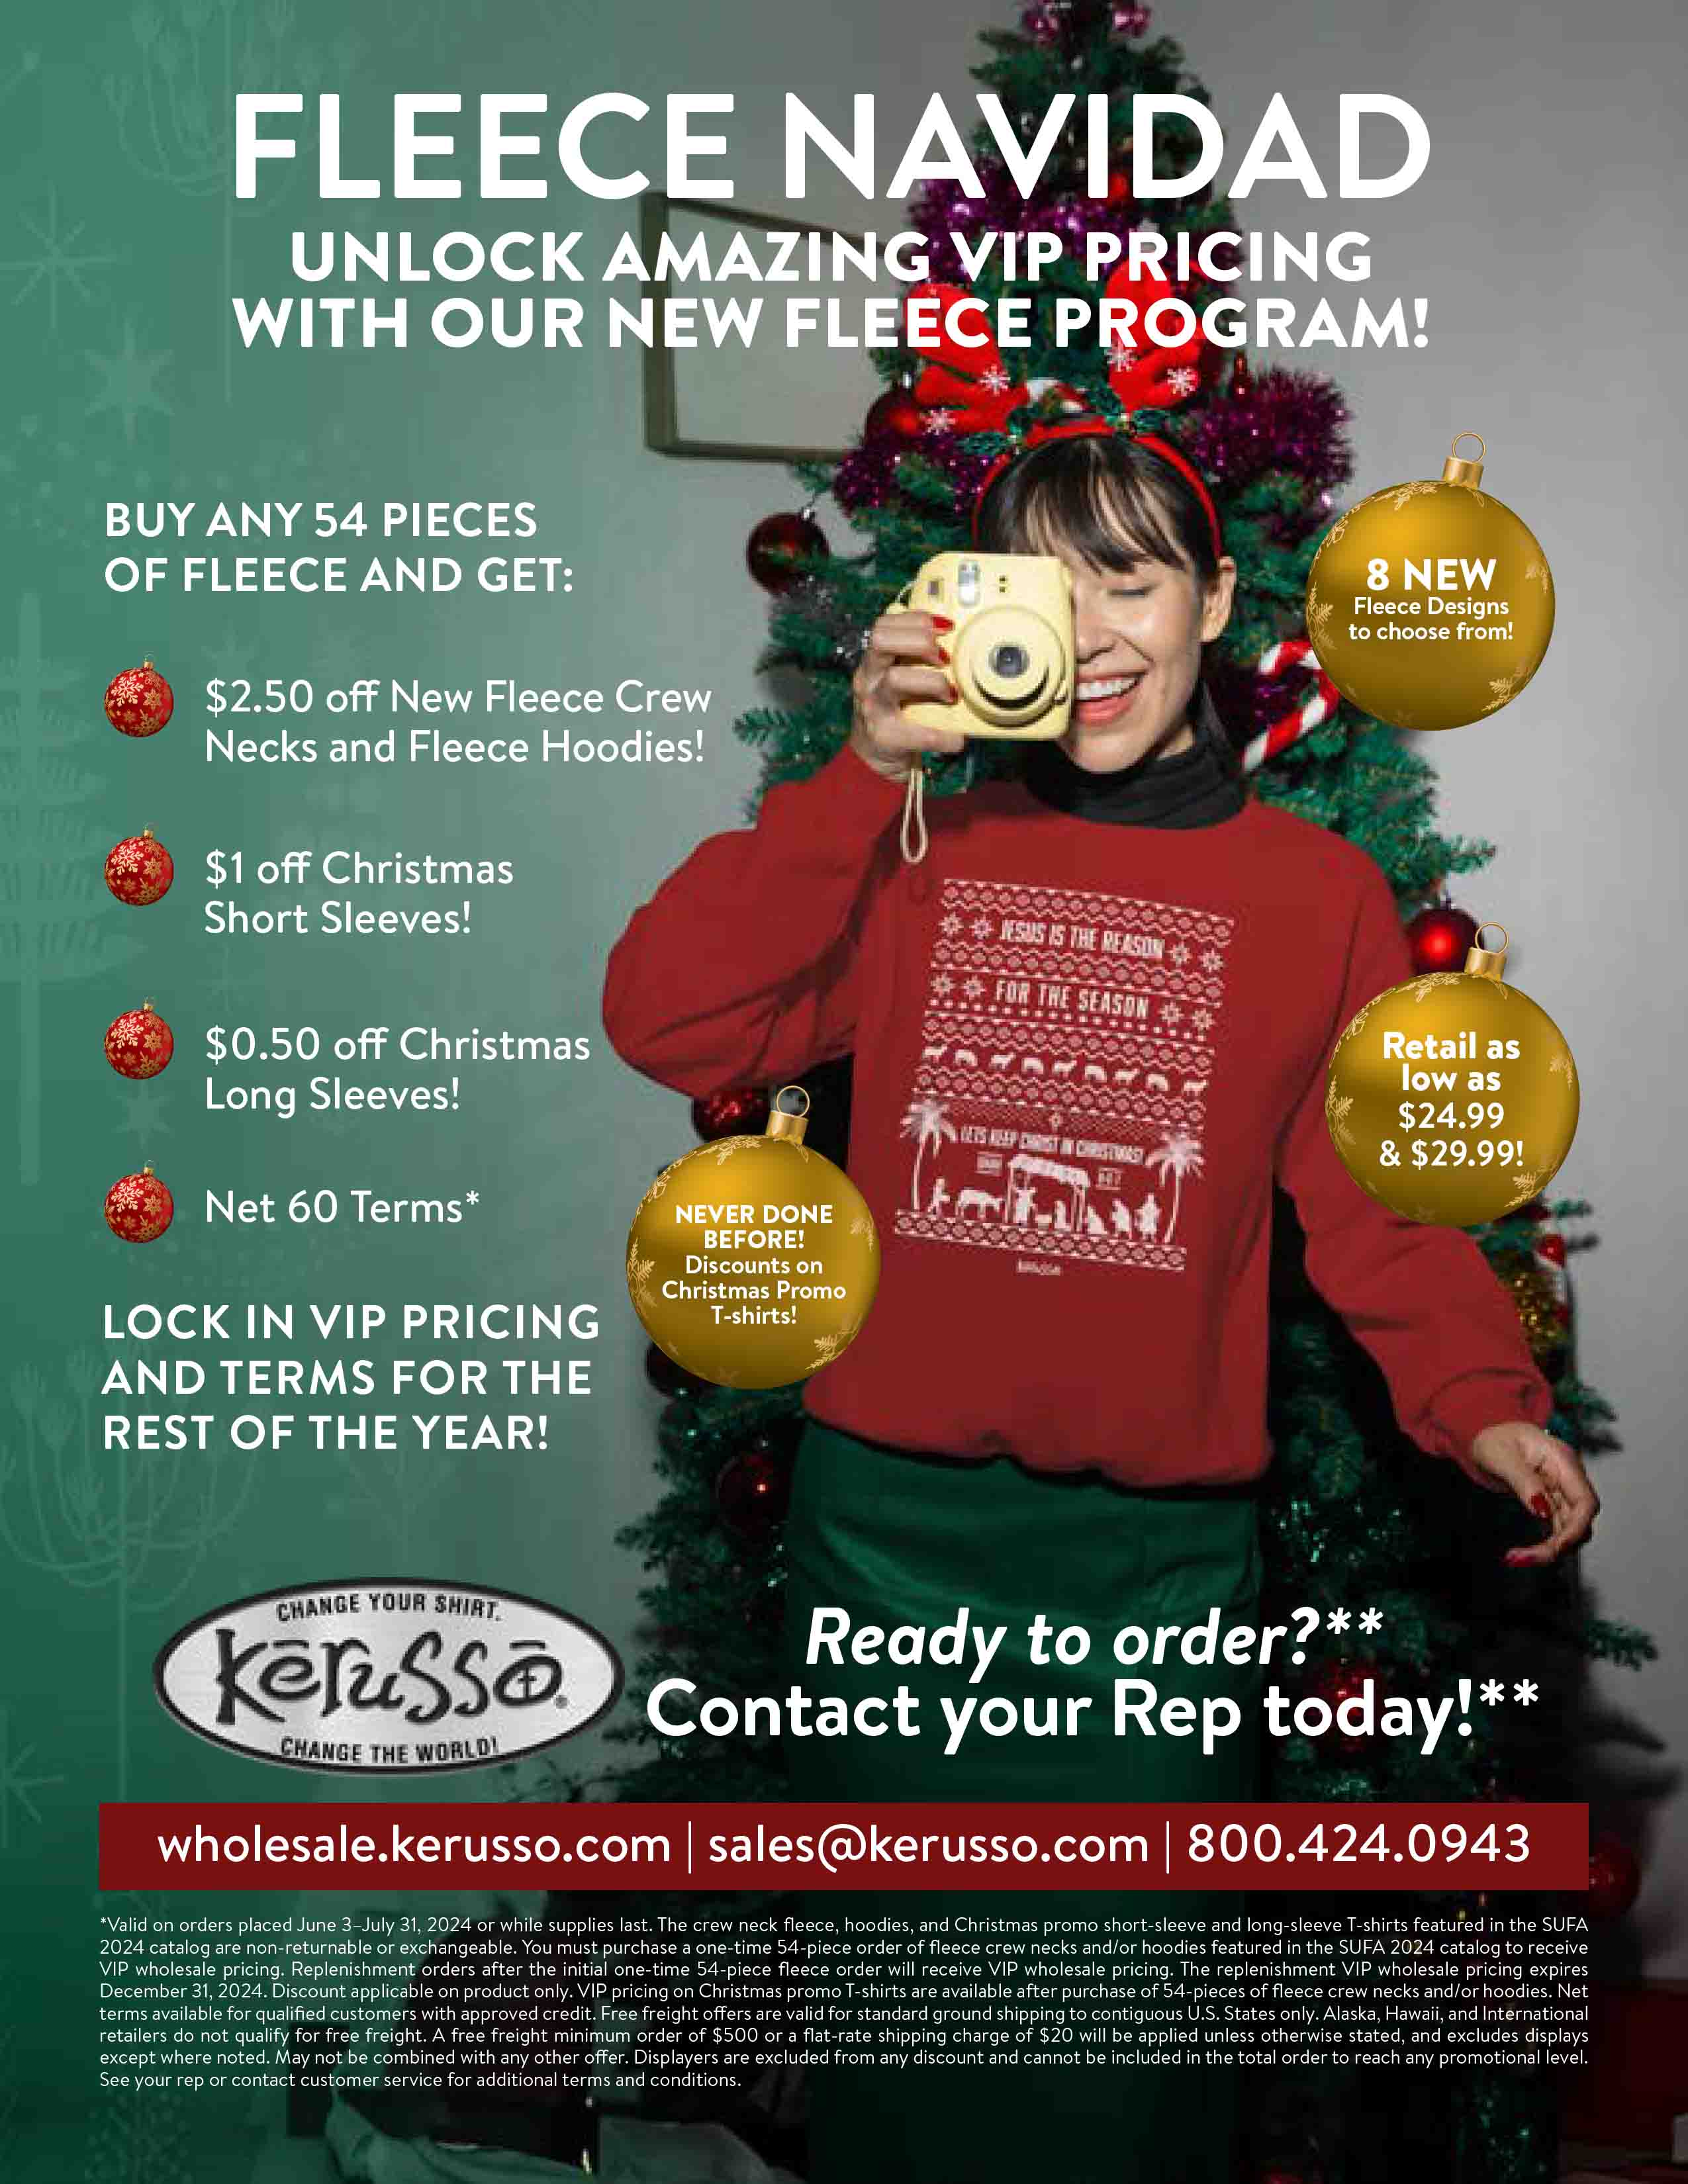 Drive Traffic + Sales with Fleece Navidad - Kerusso Wholesale